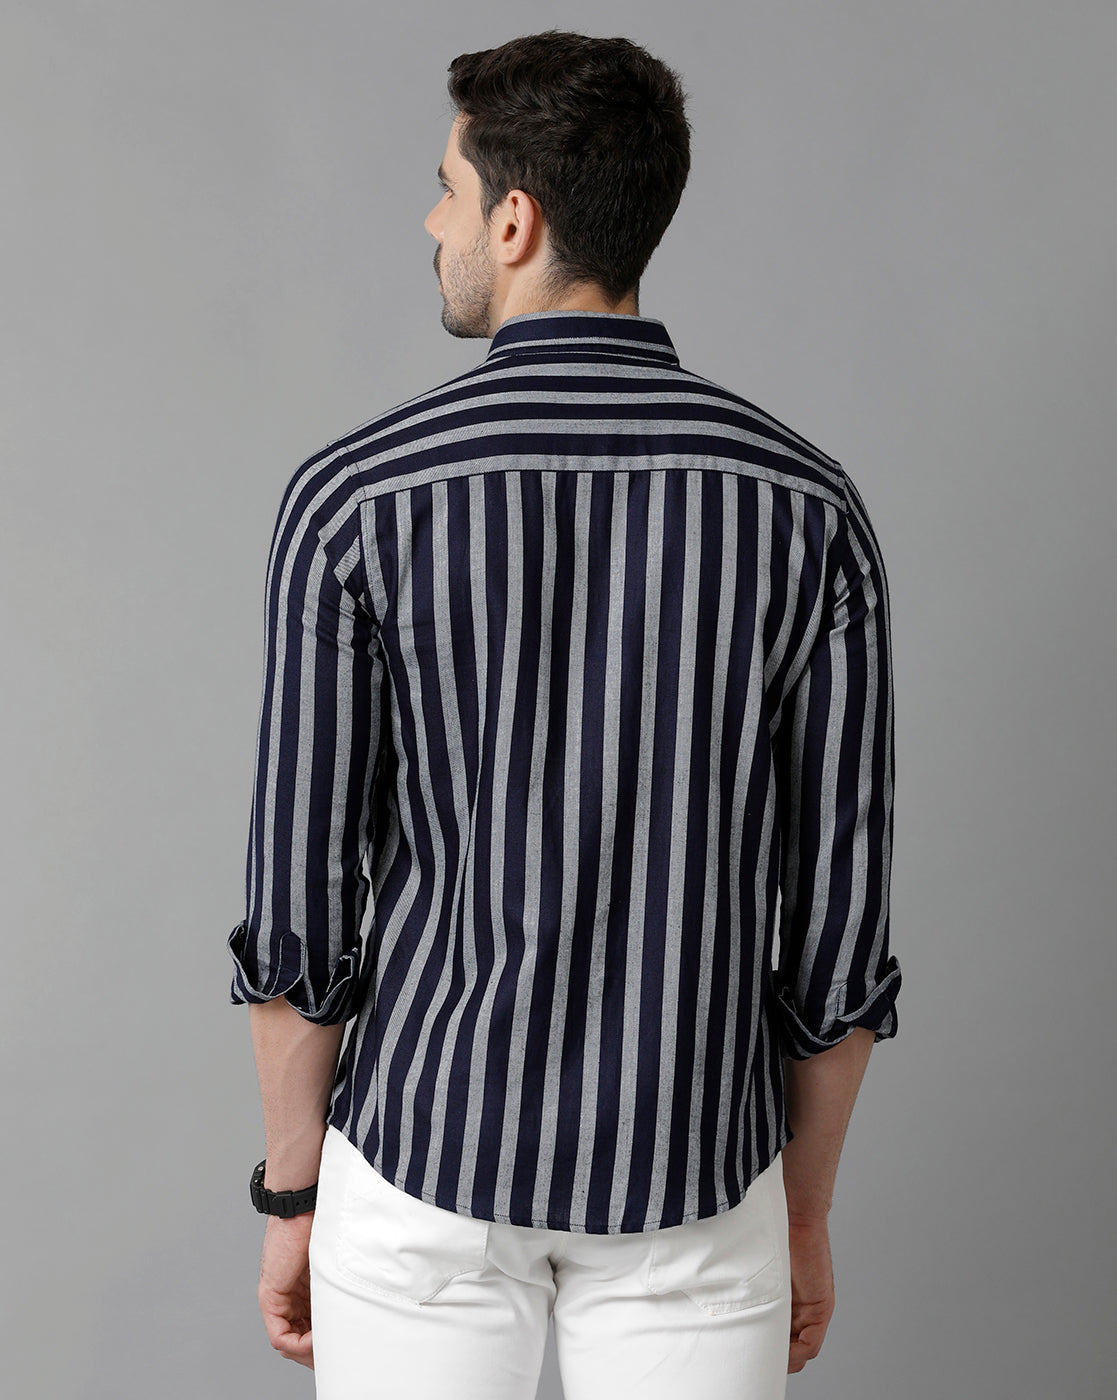 Buy online Textured striped shirt men's